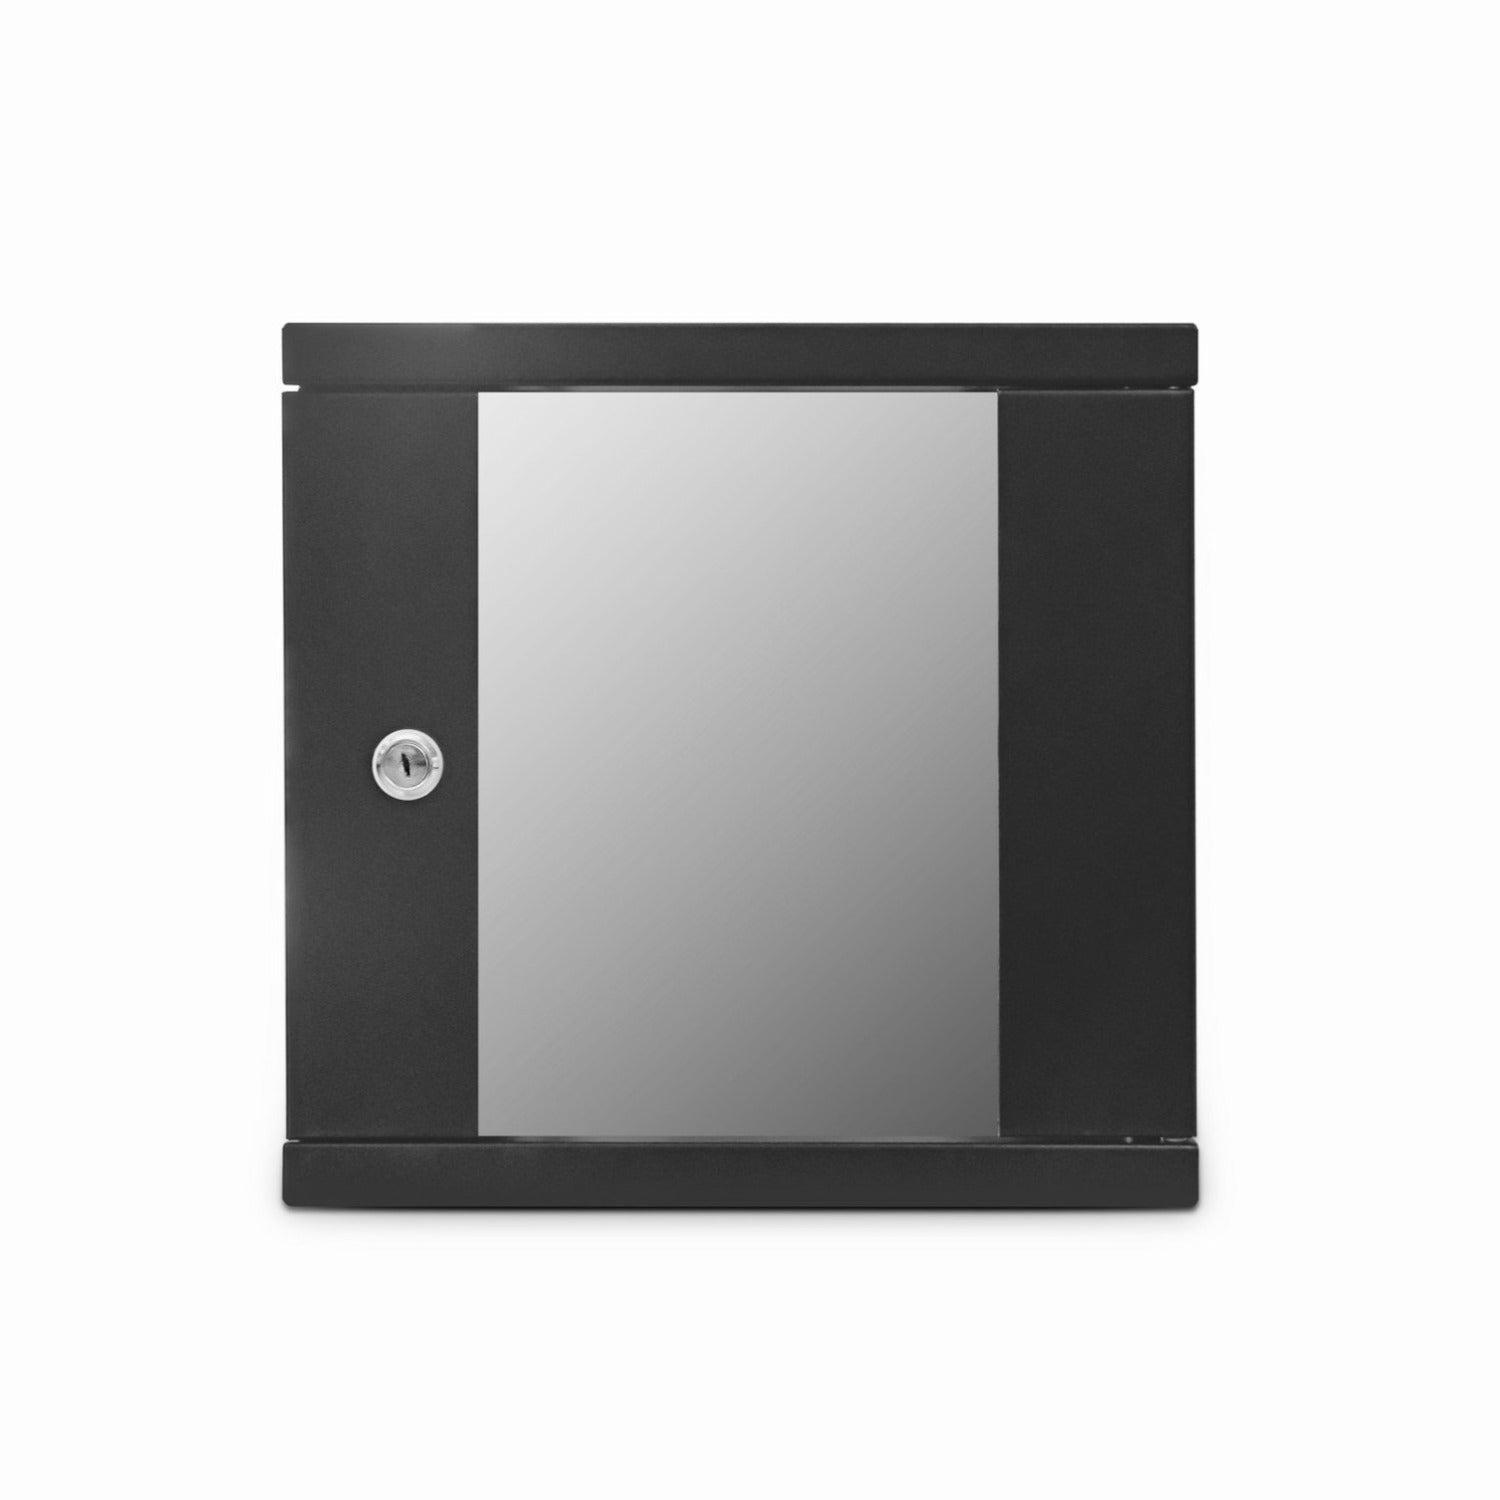 8U 310mm 10" Data Wall Cabinet (SOHO) - Black - Netbit UK